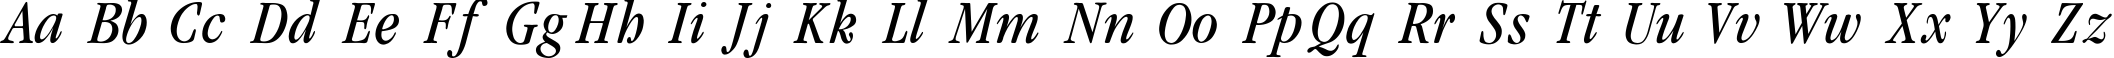 Пример написания английского алфавита шрифтом Garamond_Condenced-Normal-It